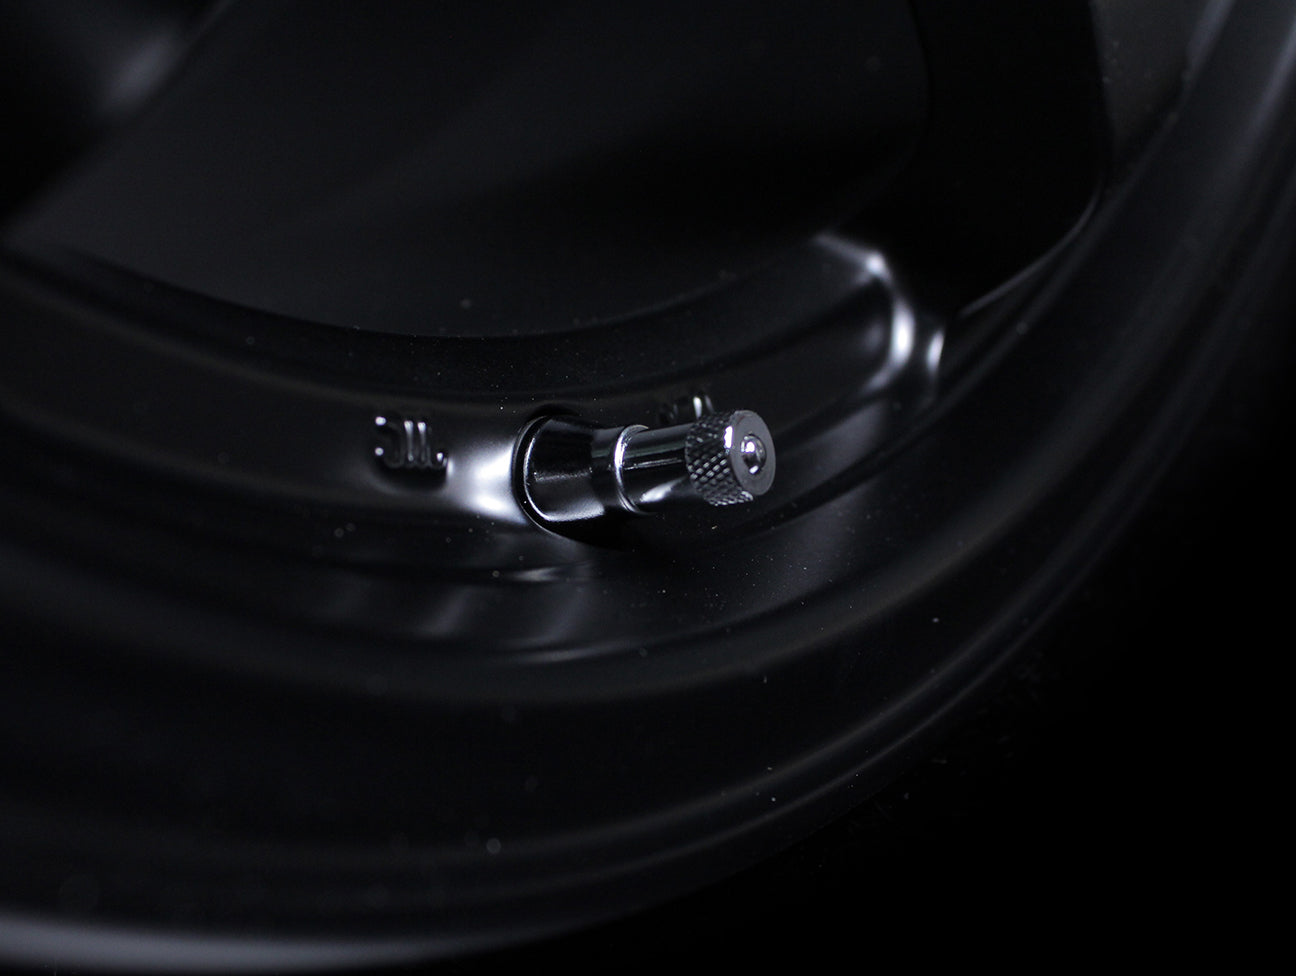 Rays Gram Lights 57DR Wheels - Semi Gloss Black 18x9.5 / 5x114